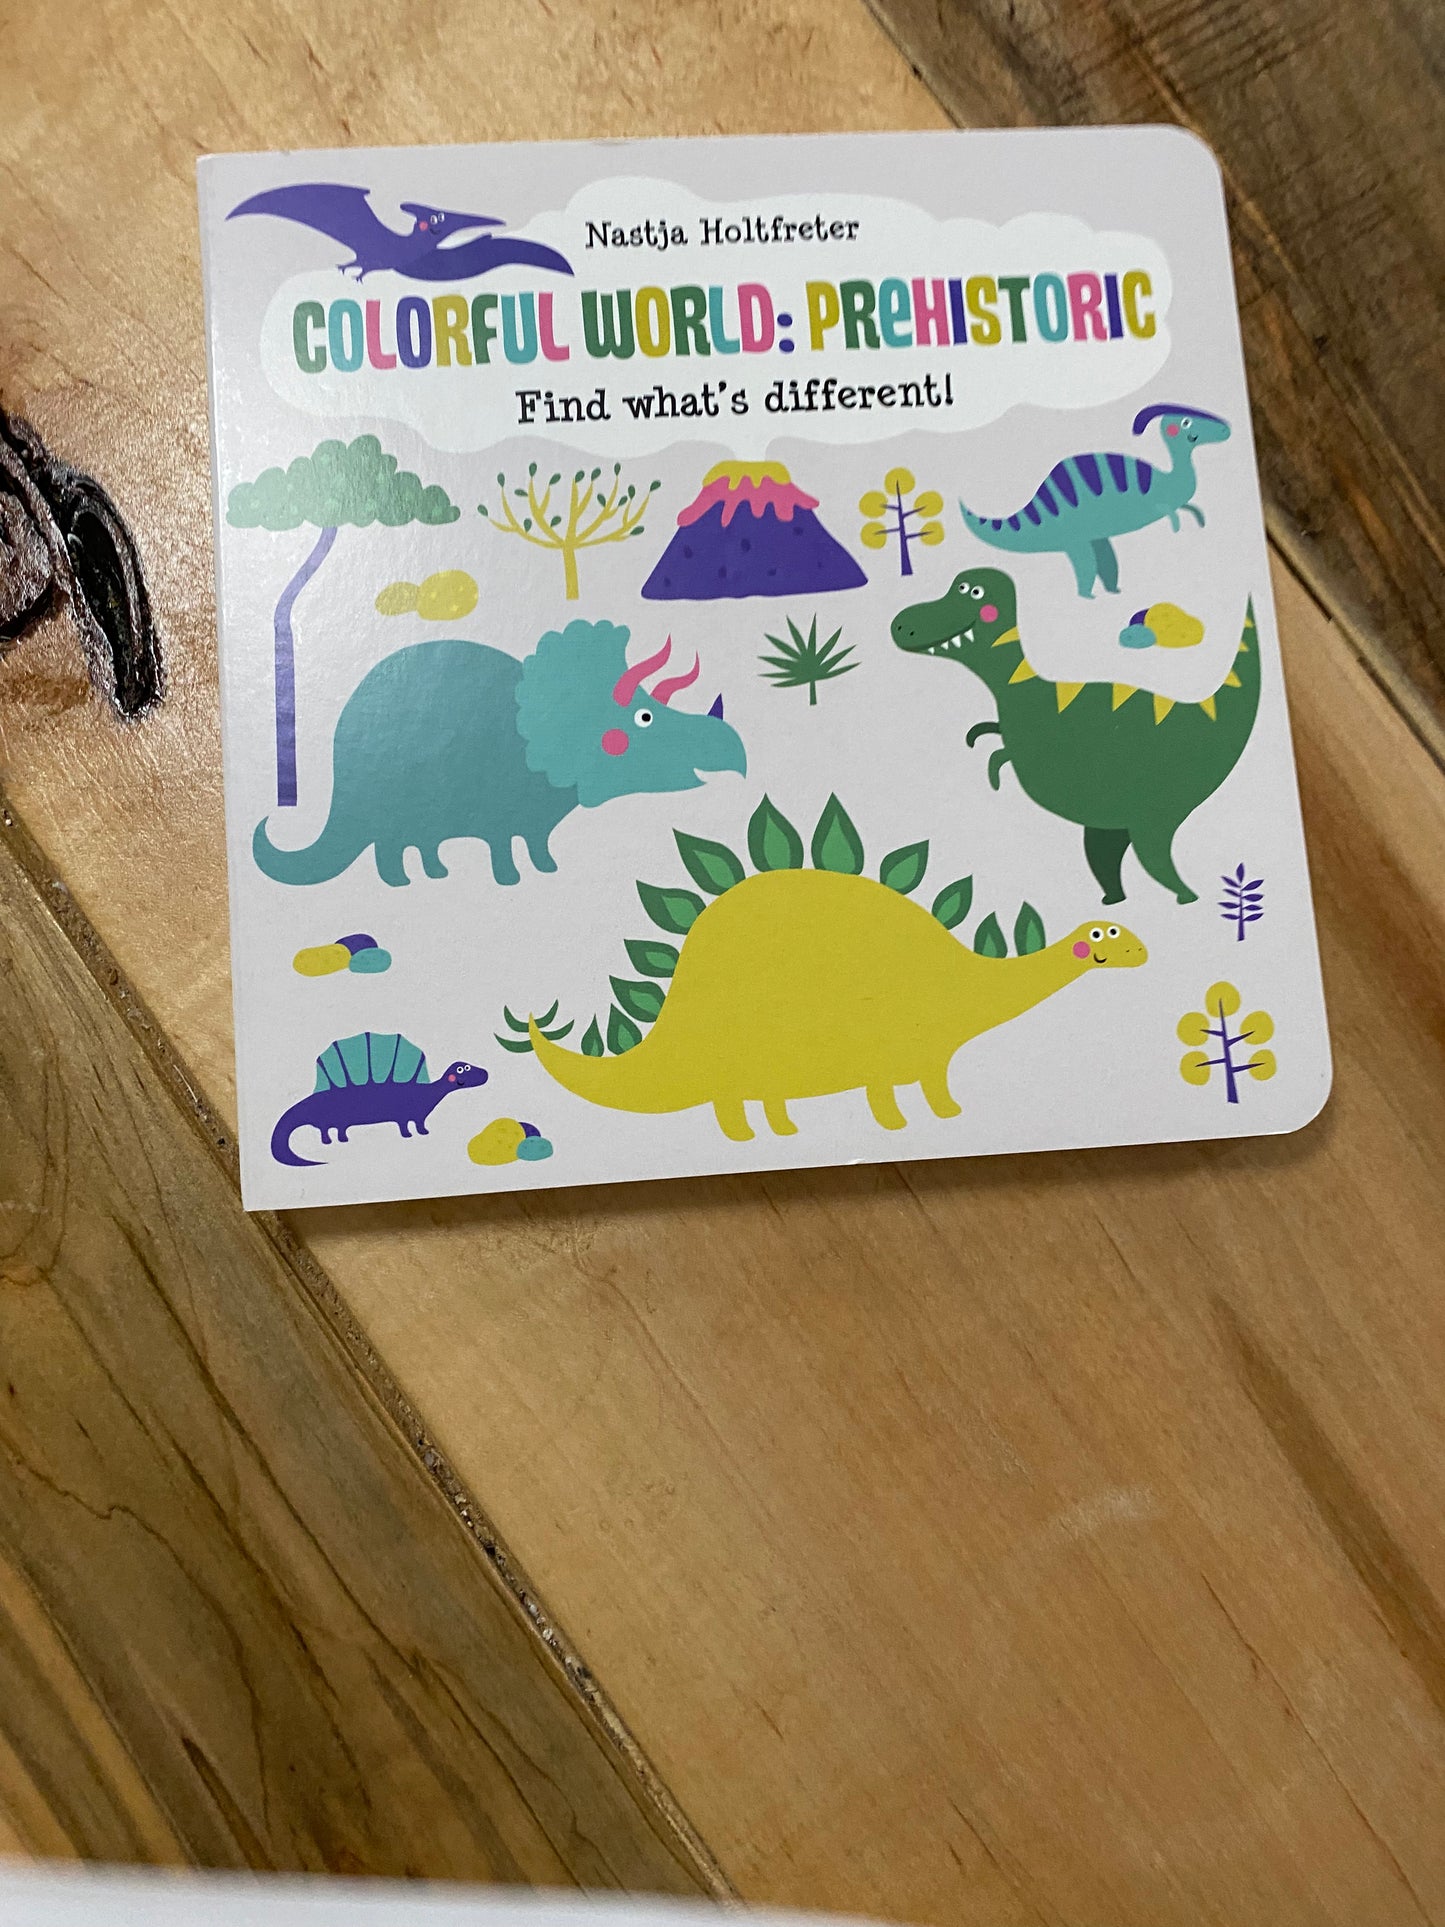 Colorful world prehistoric